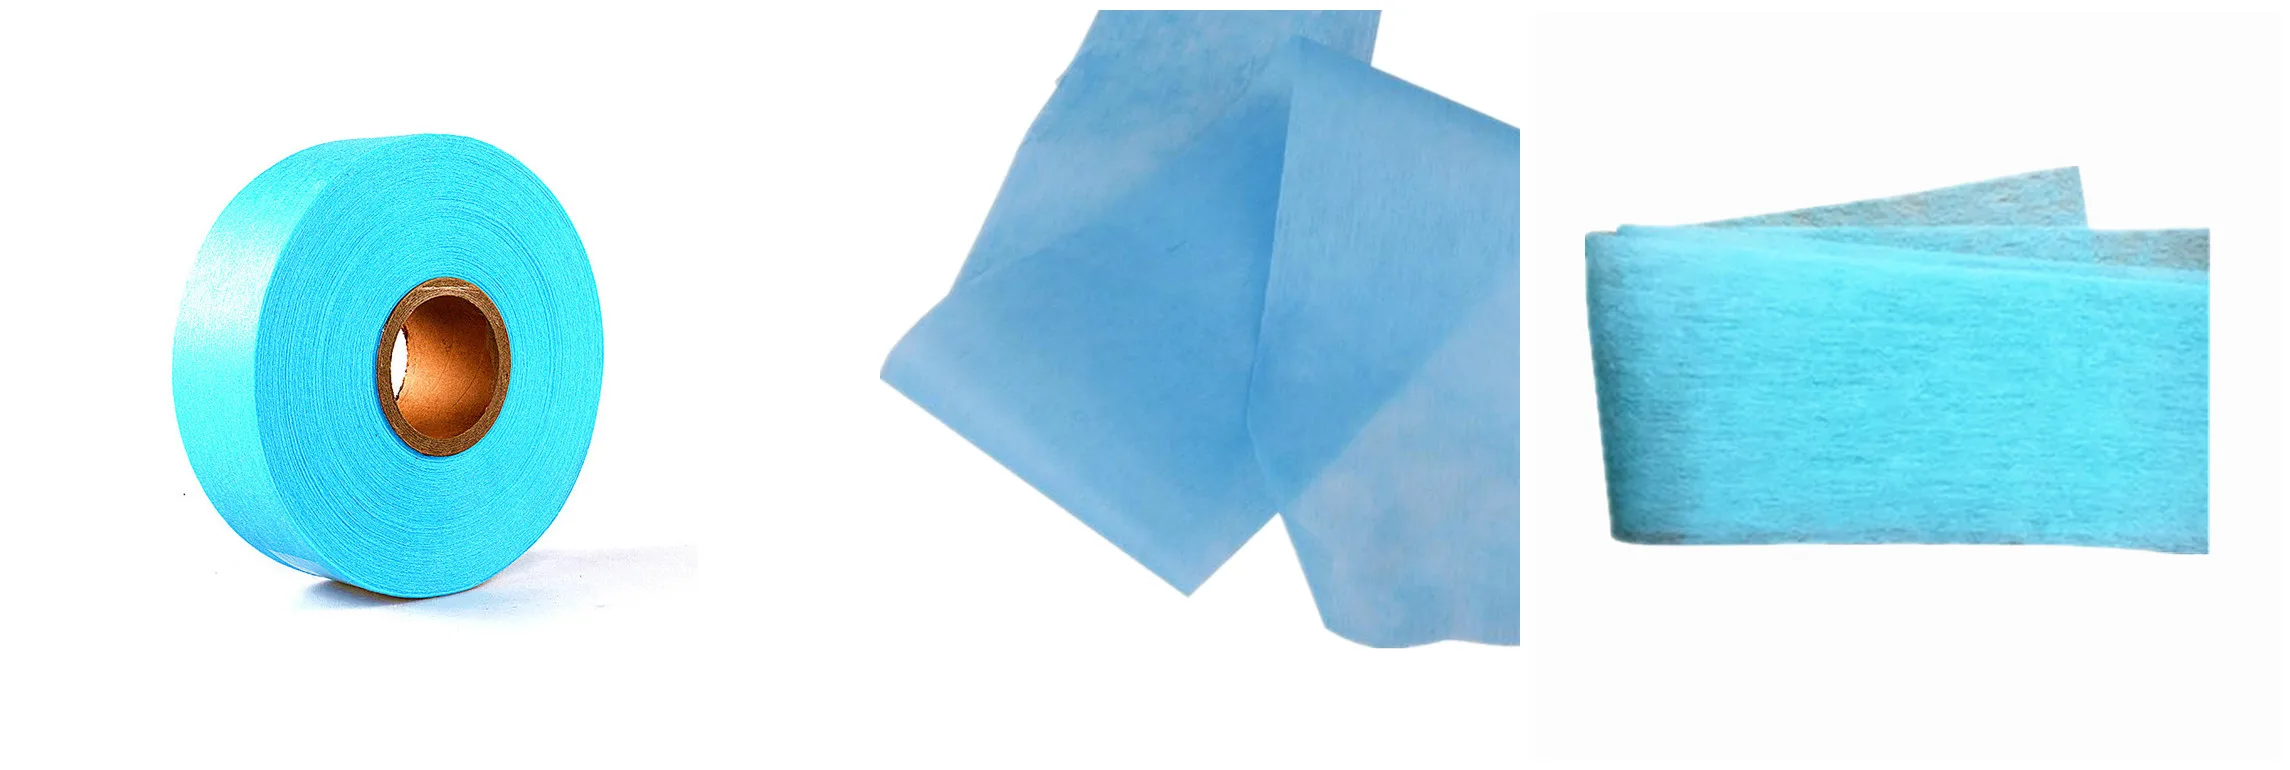 Pannolino usa e getta ADL blu assorbente con tessuto non tessuto